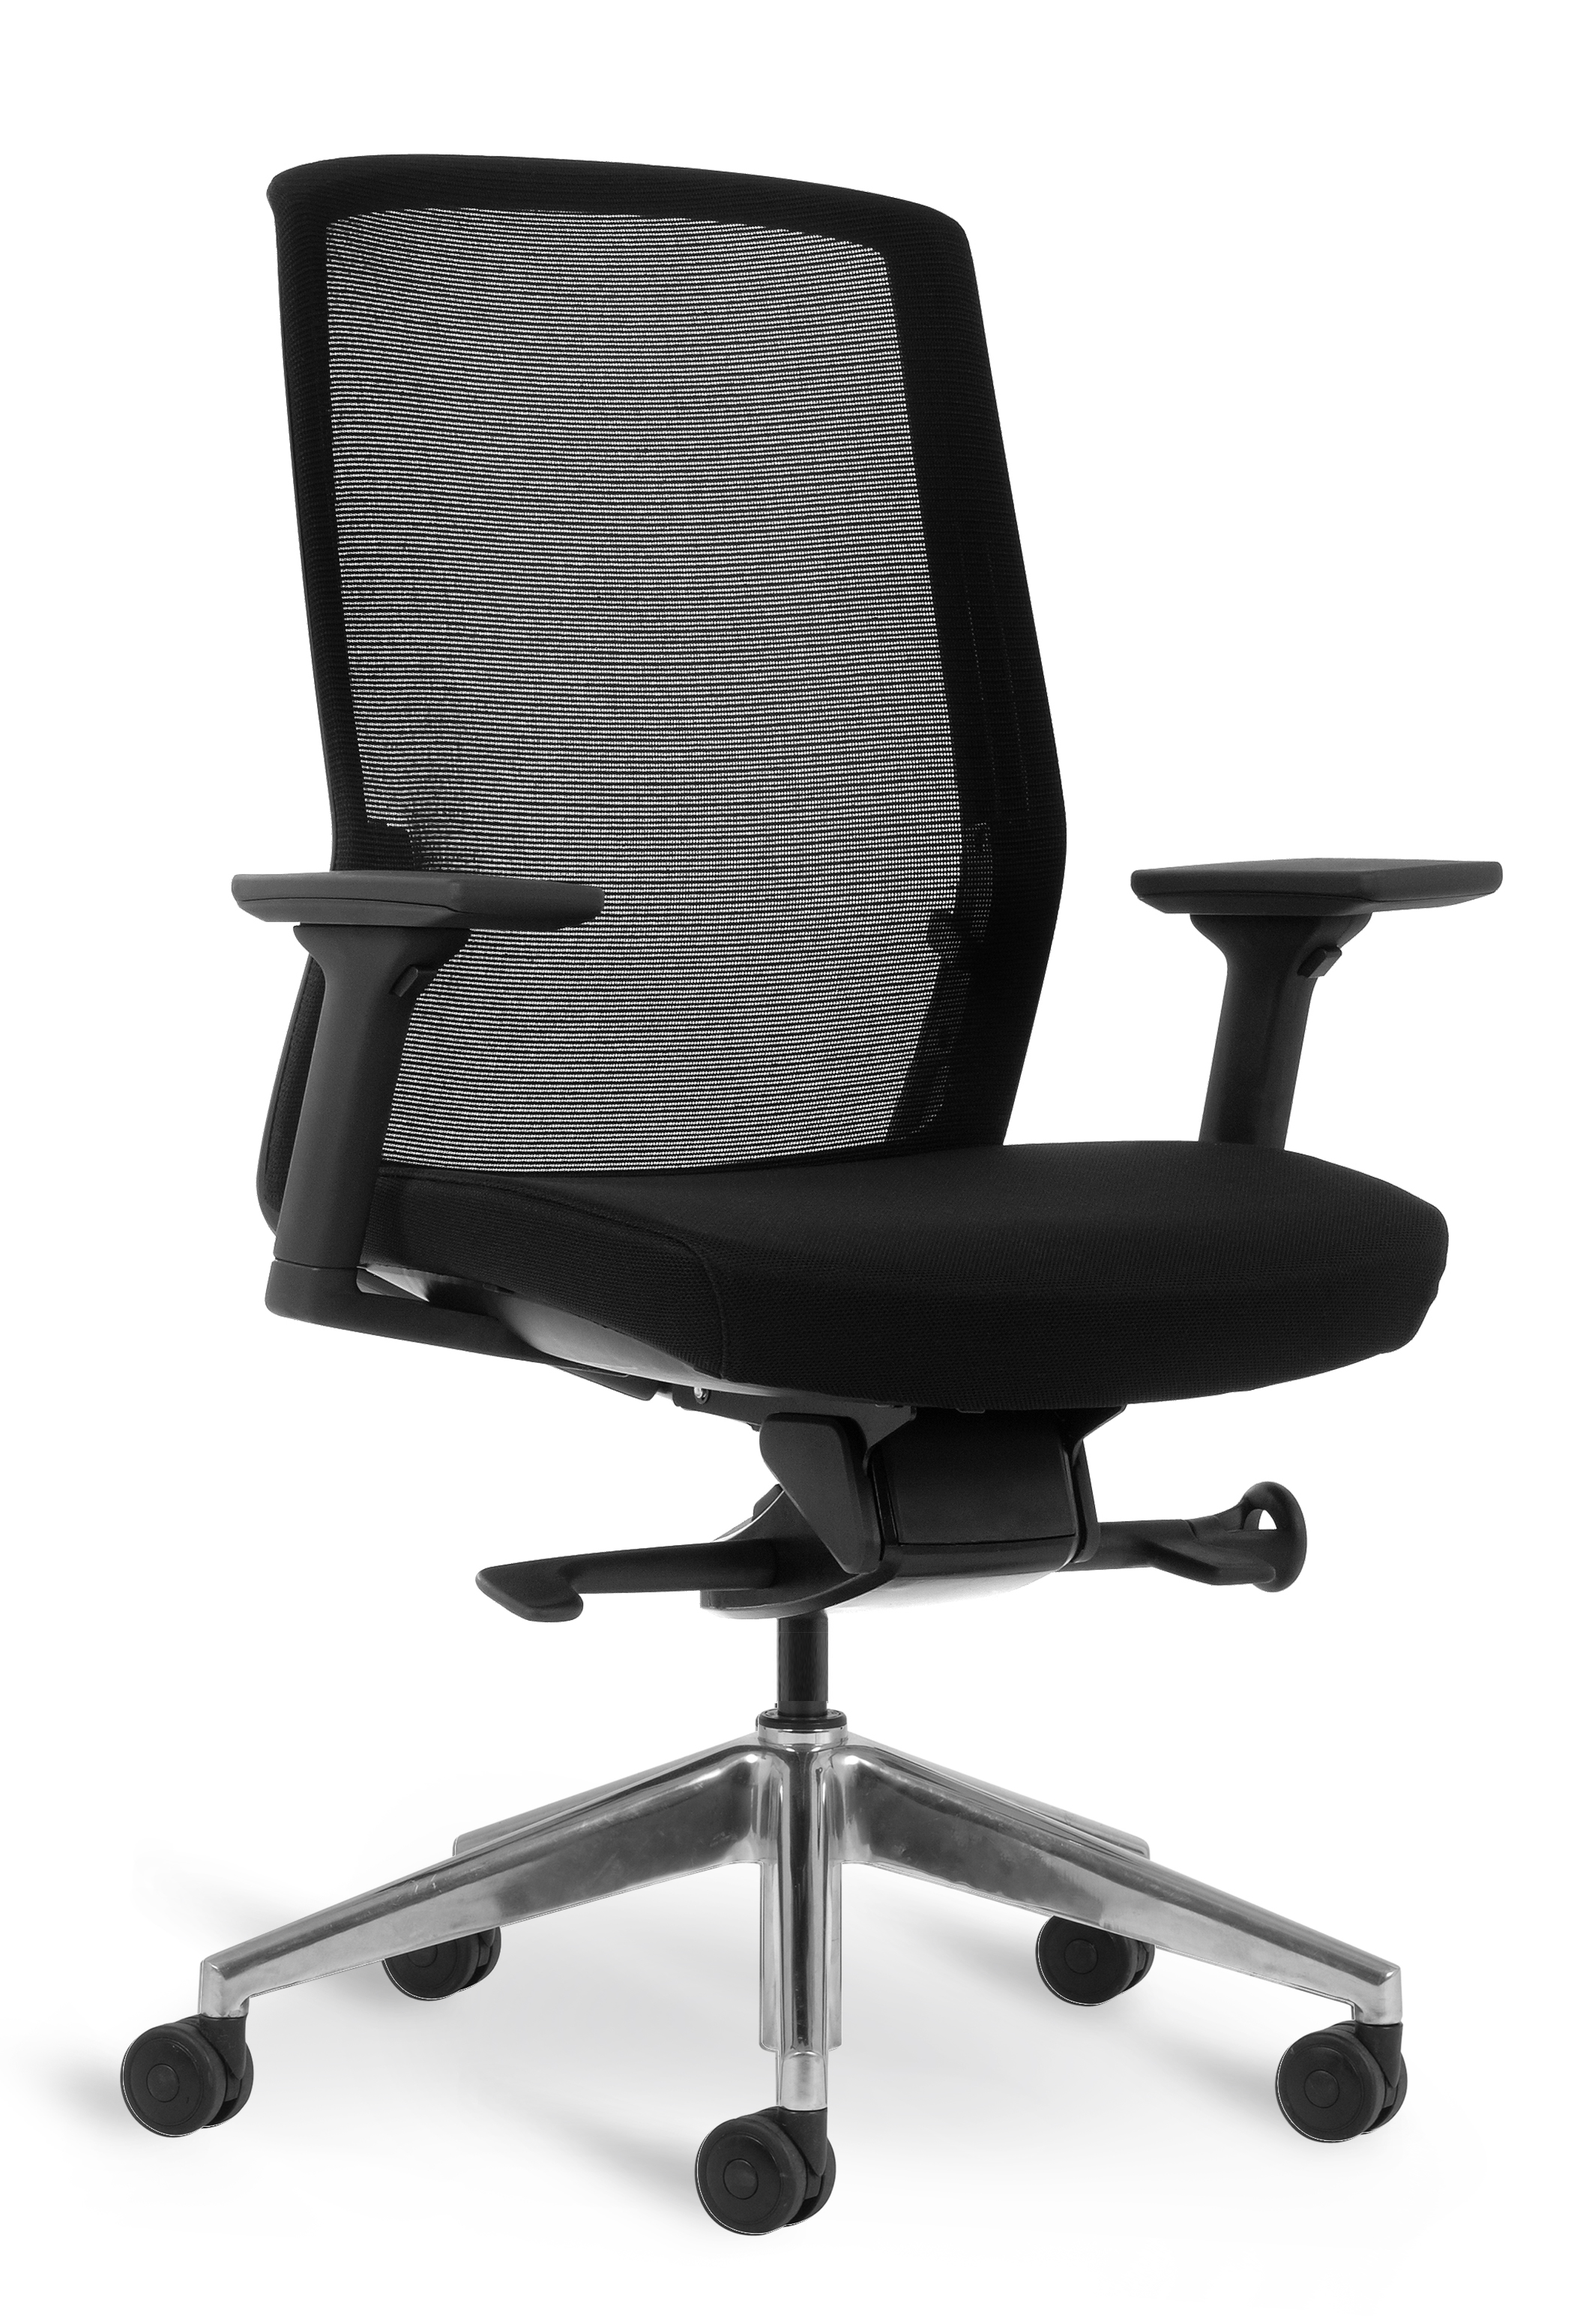 WS - J1 task chair - Black, polished base (Front angle)